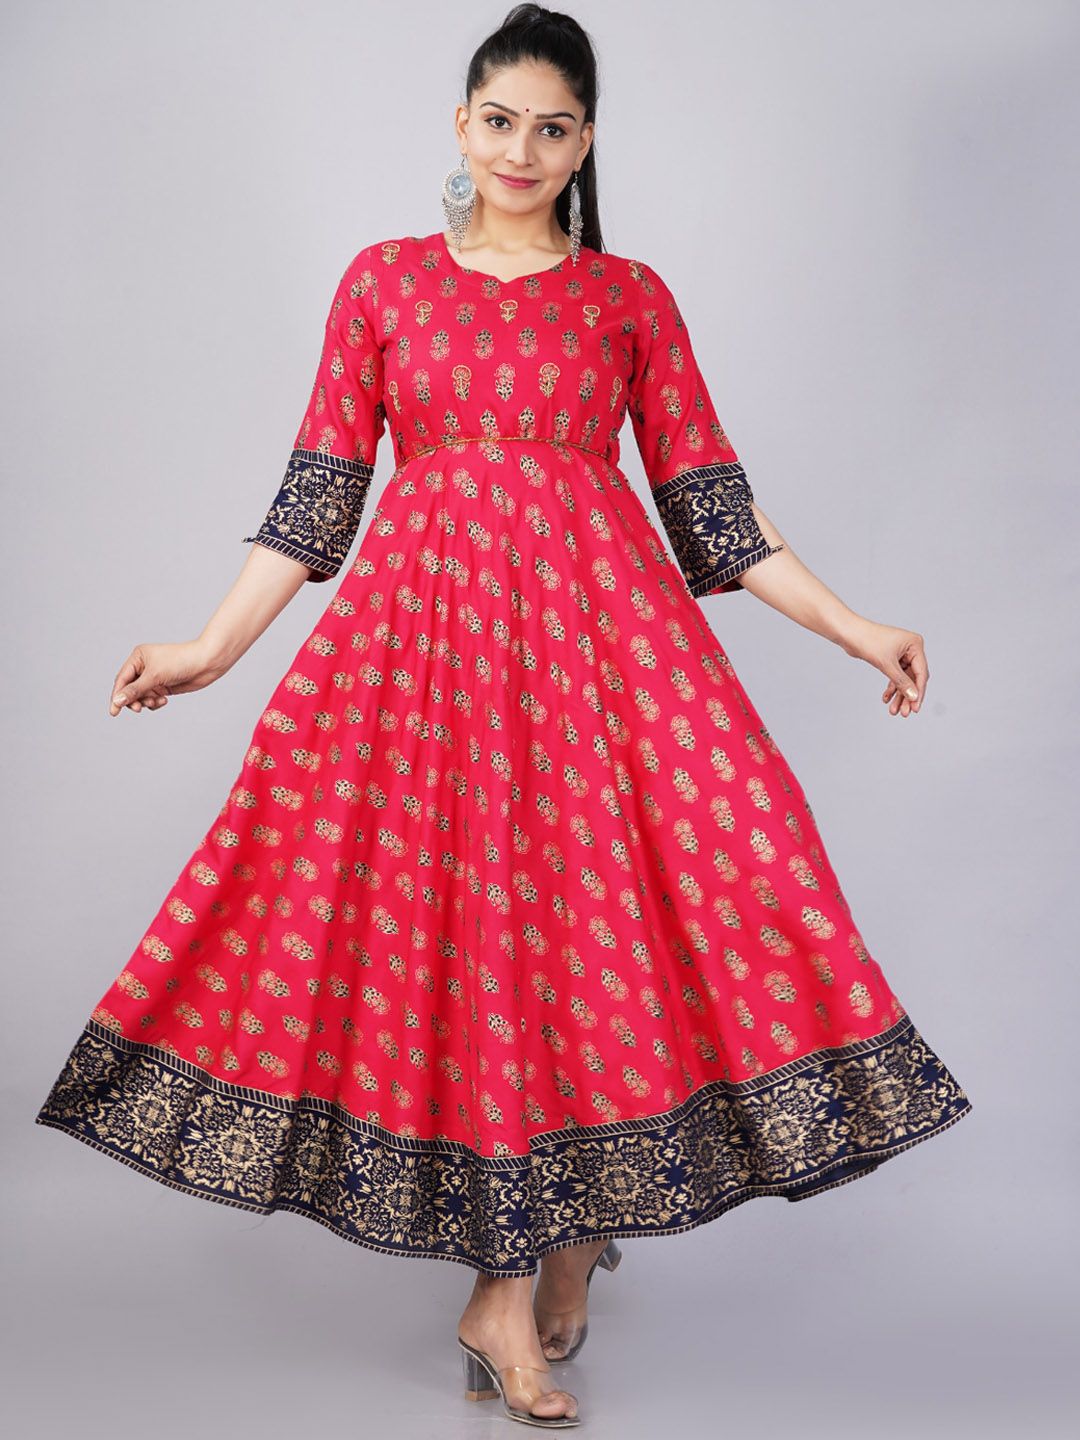 KALINI Pink & Navy Blue Ethnic Motifs Ethnic Anarkali Maxi Dress Price in India